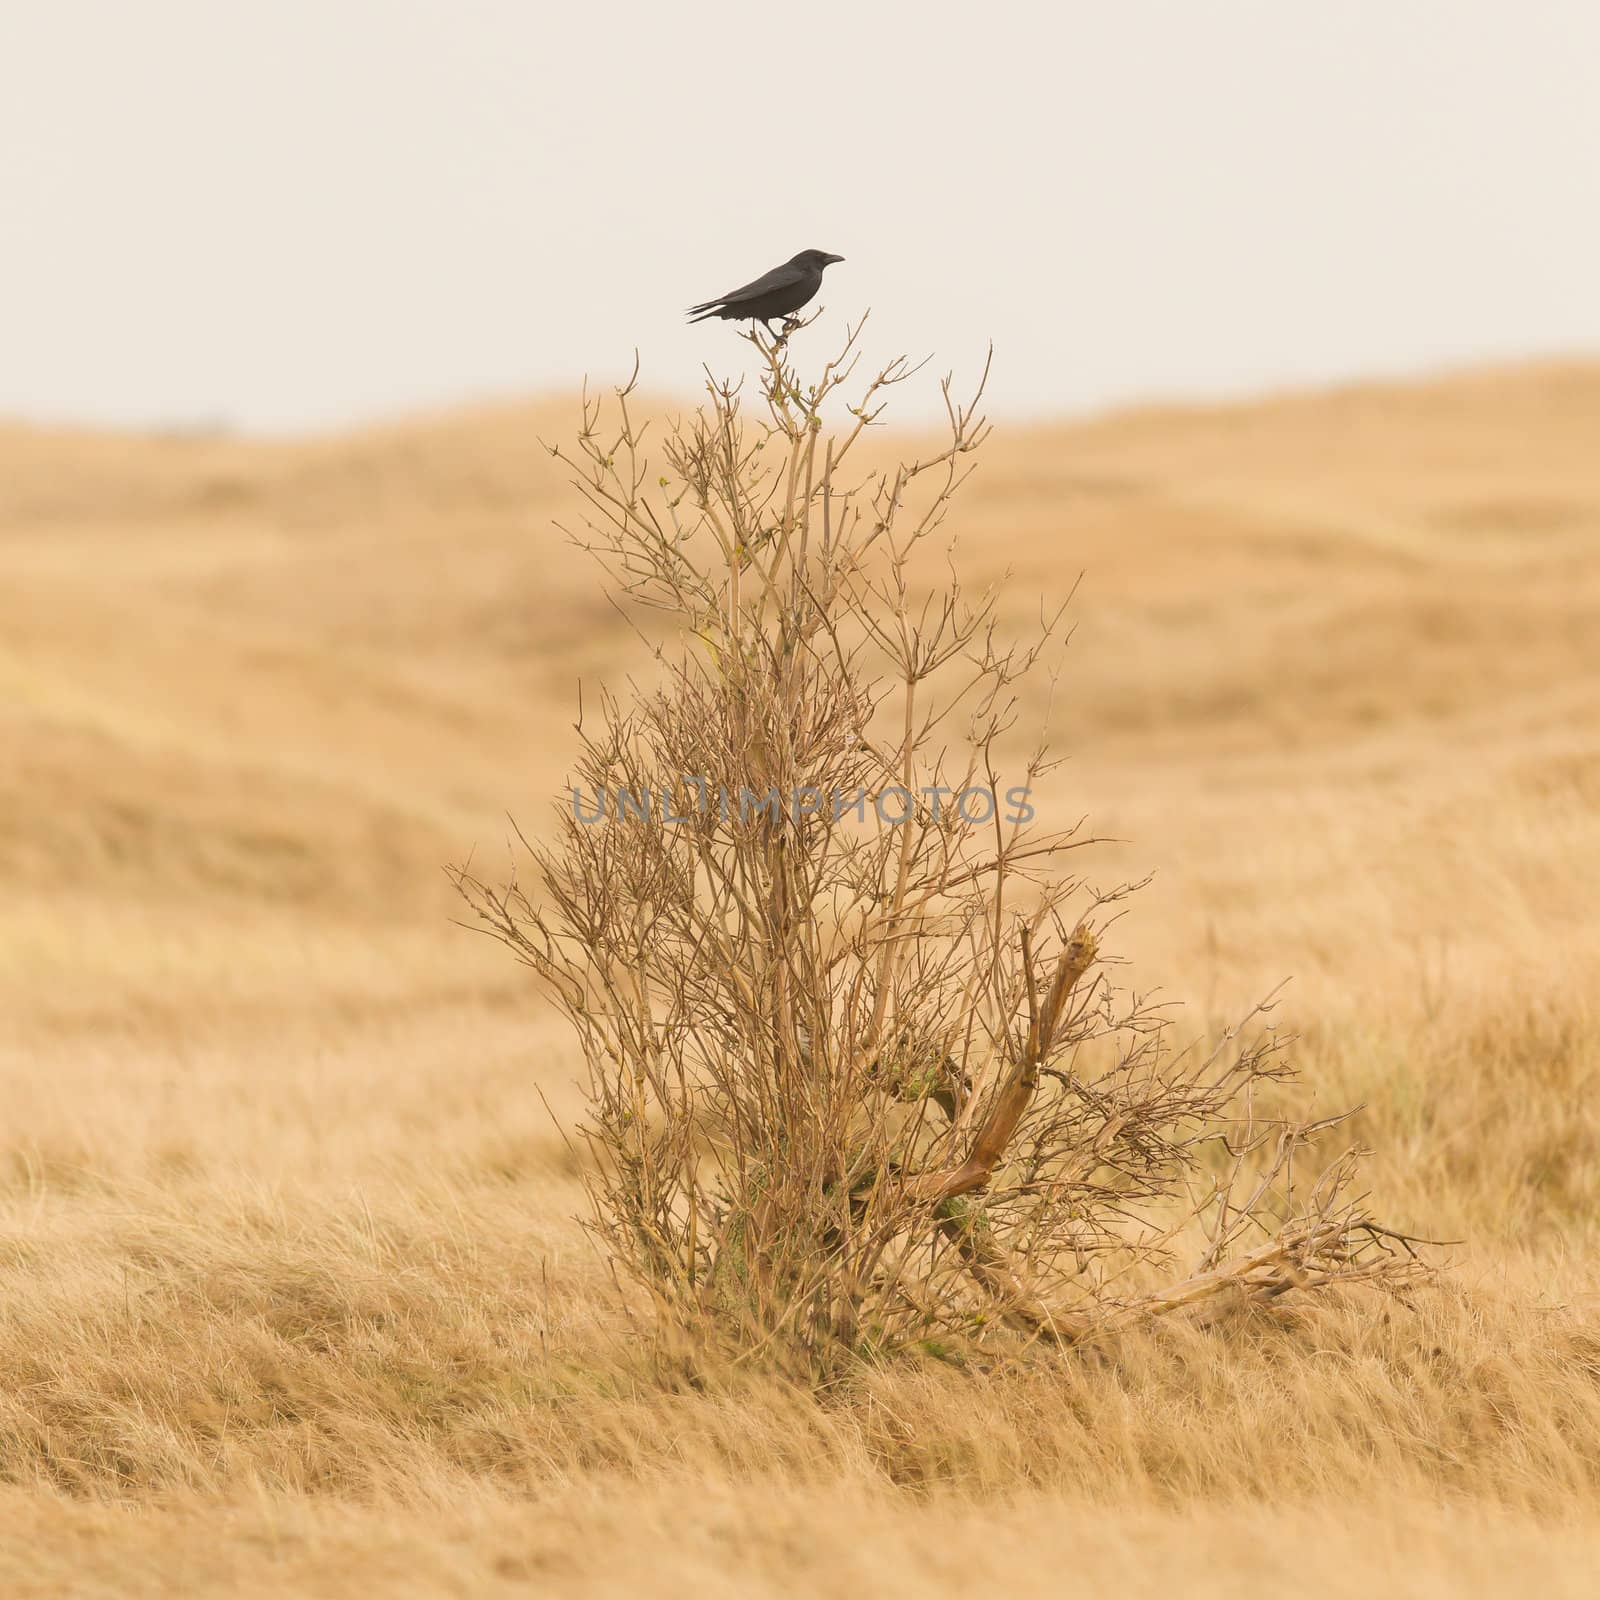 Single crow by michaklootwijk